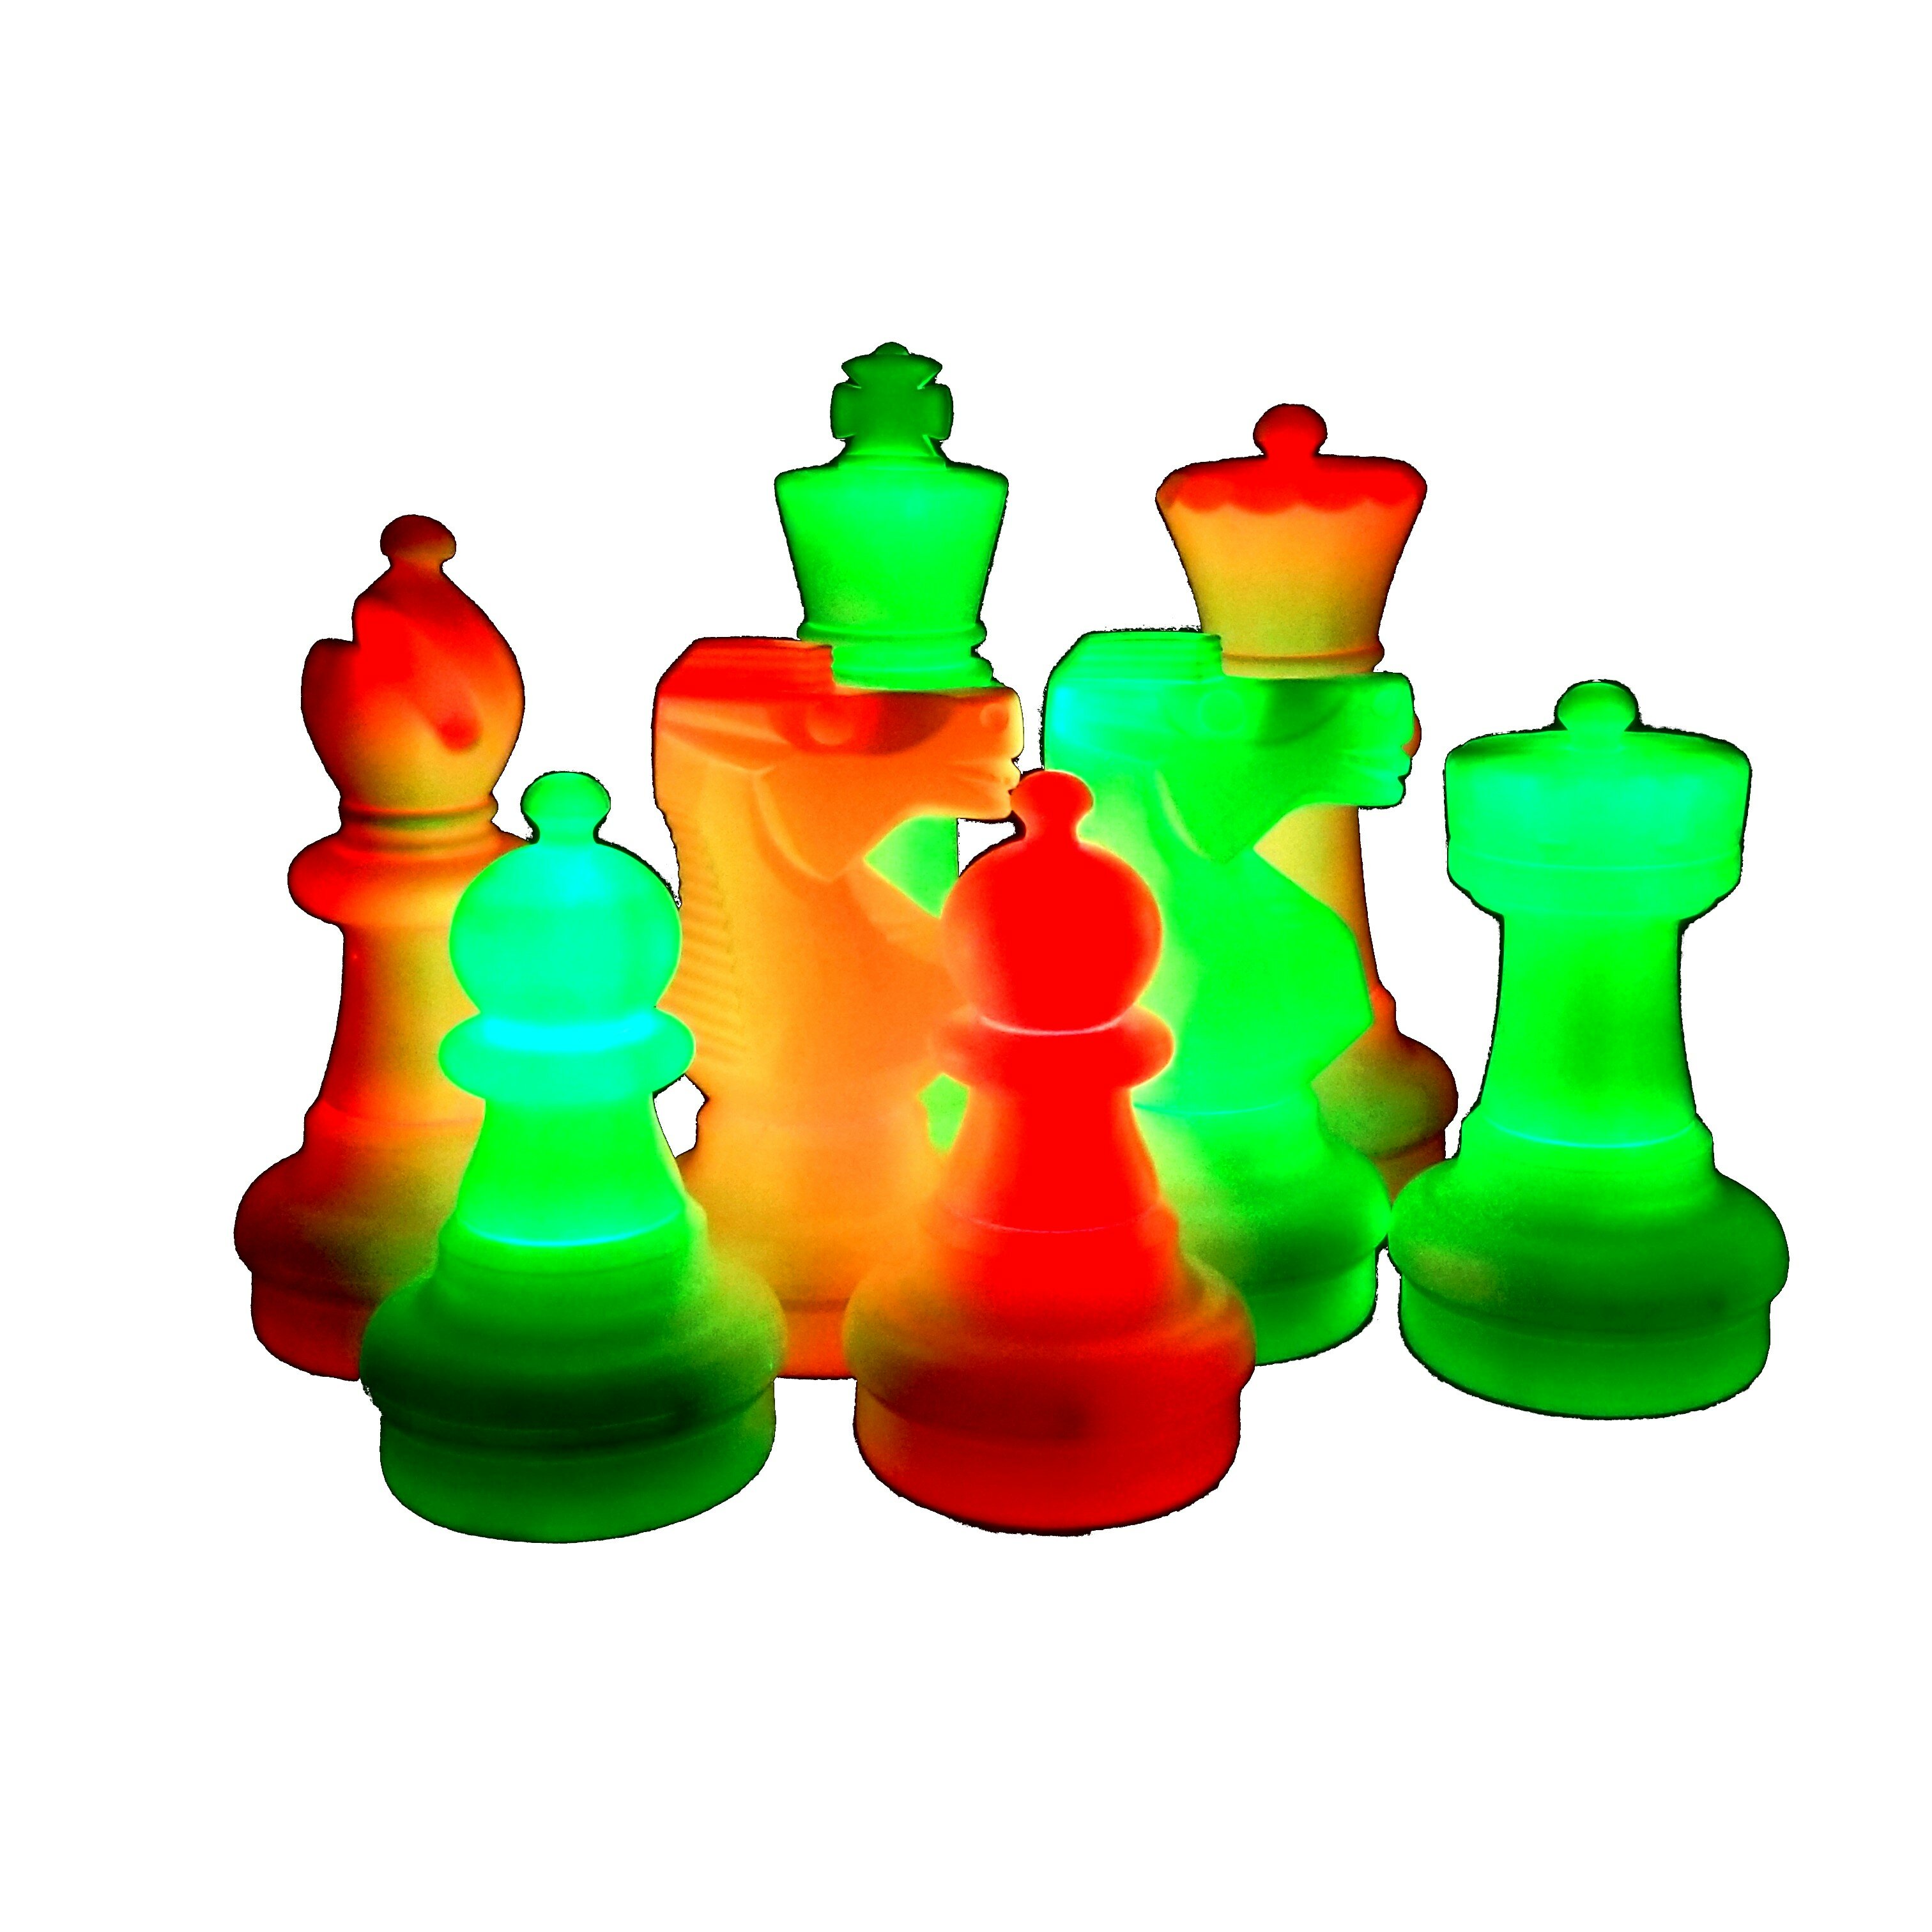 MegaChess 9 Inch Light Plastic Rook Giant Chess Piece